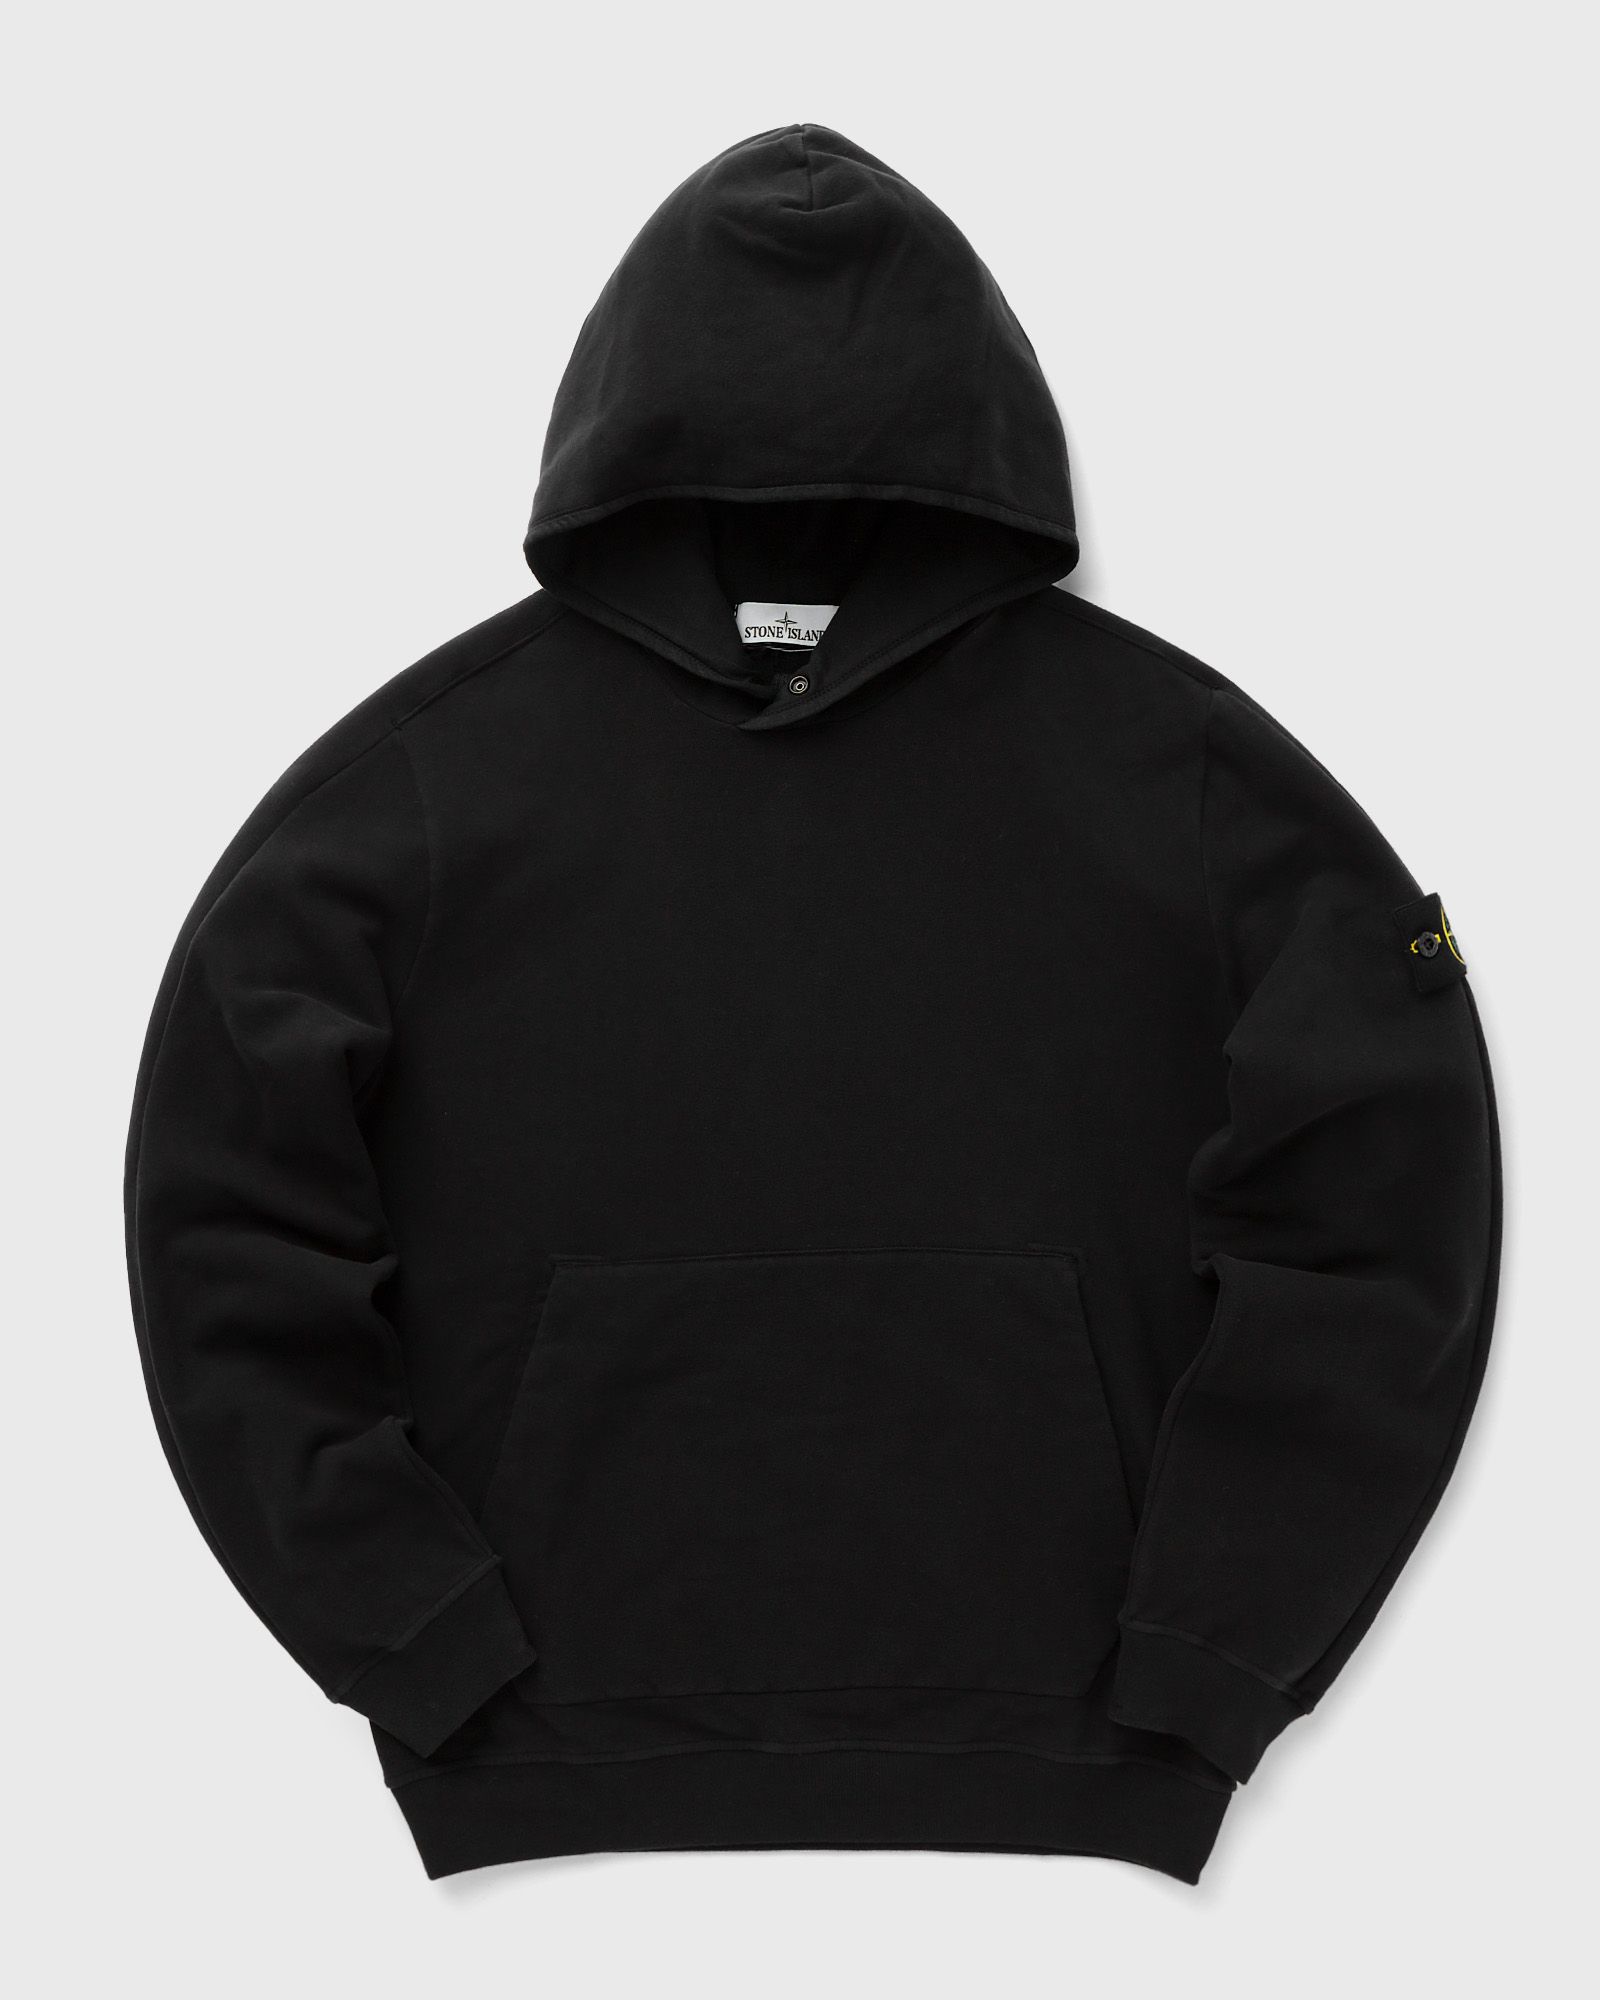 Stone Island - sweat-shirt stretch cotton fleece, garment dyed men hoodies black in größe:s